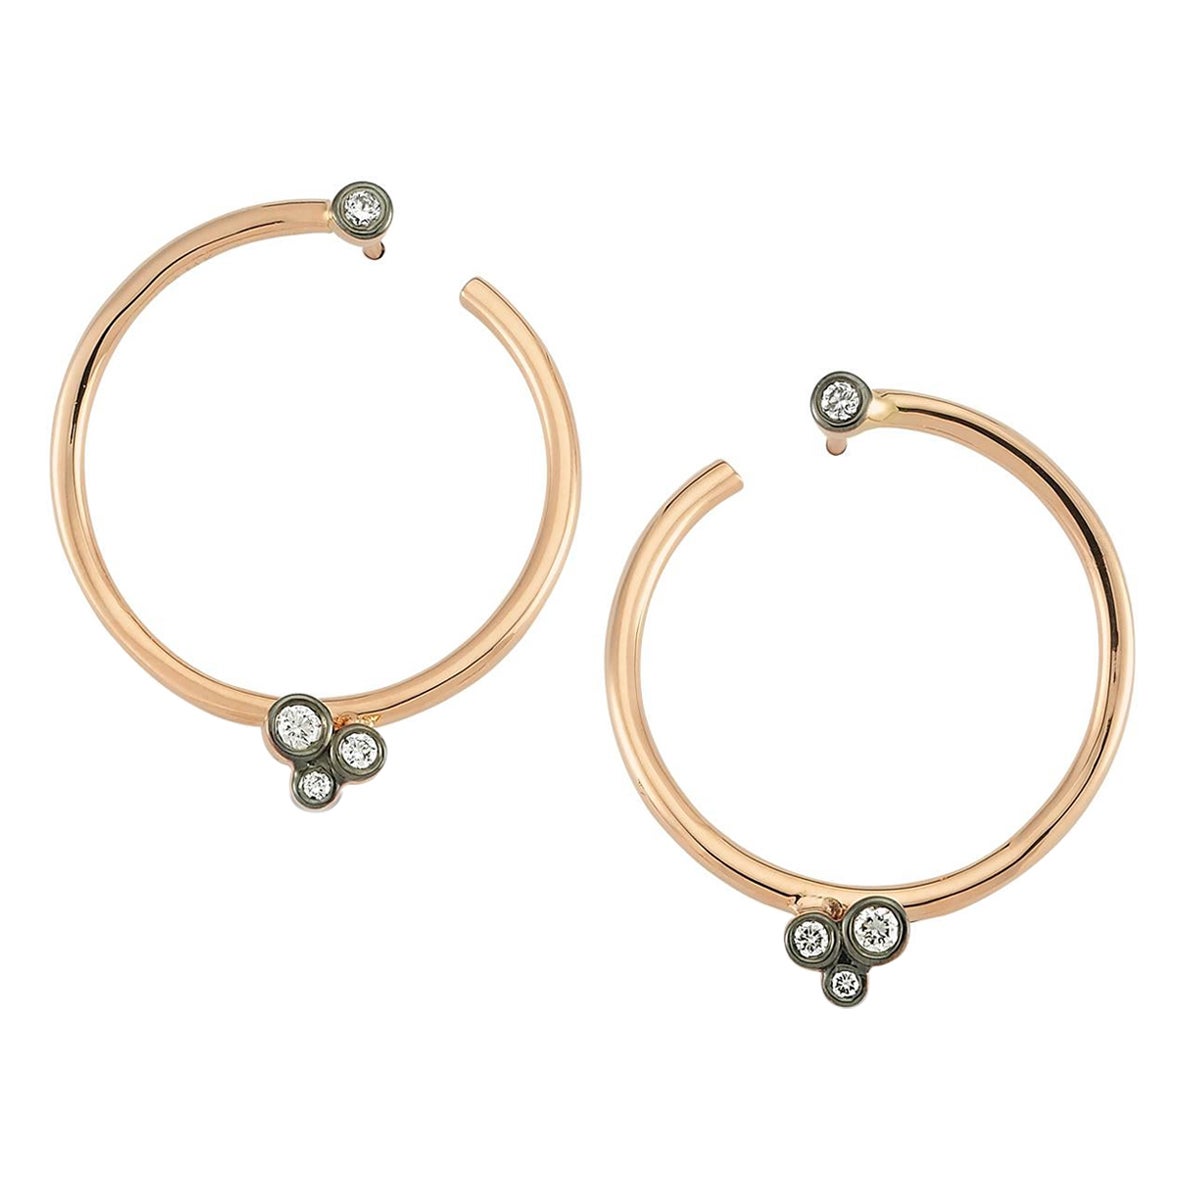 Waves Hoop Earrings with White Diamond in 14k Rose Gold by Selda Jewellery For Sale